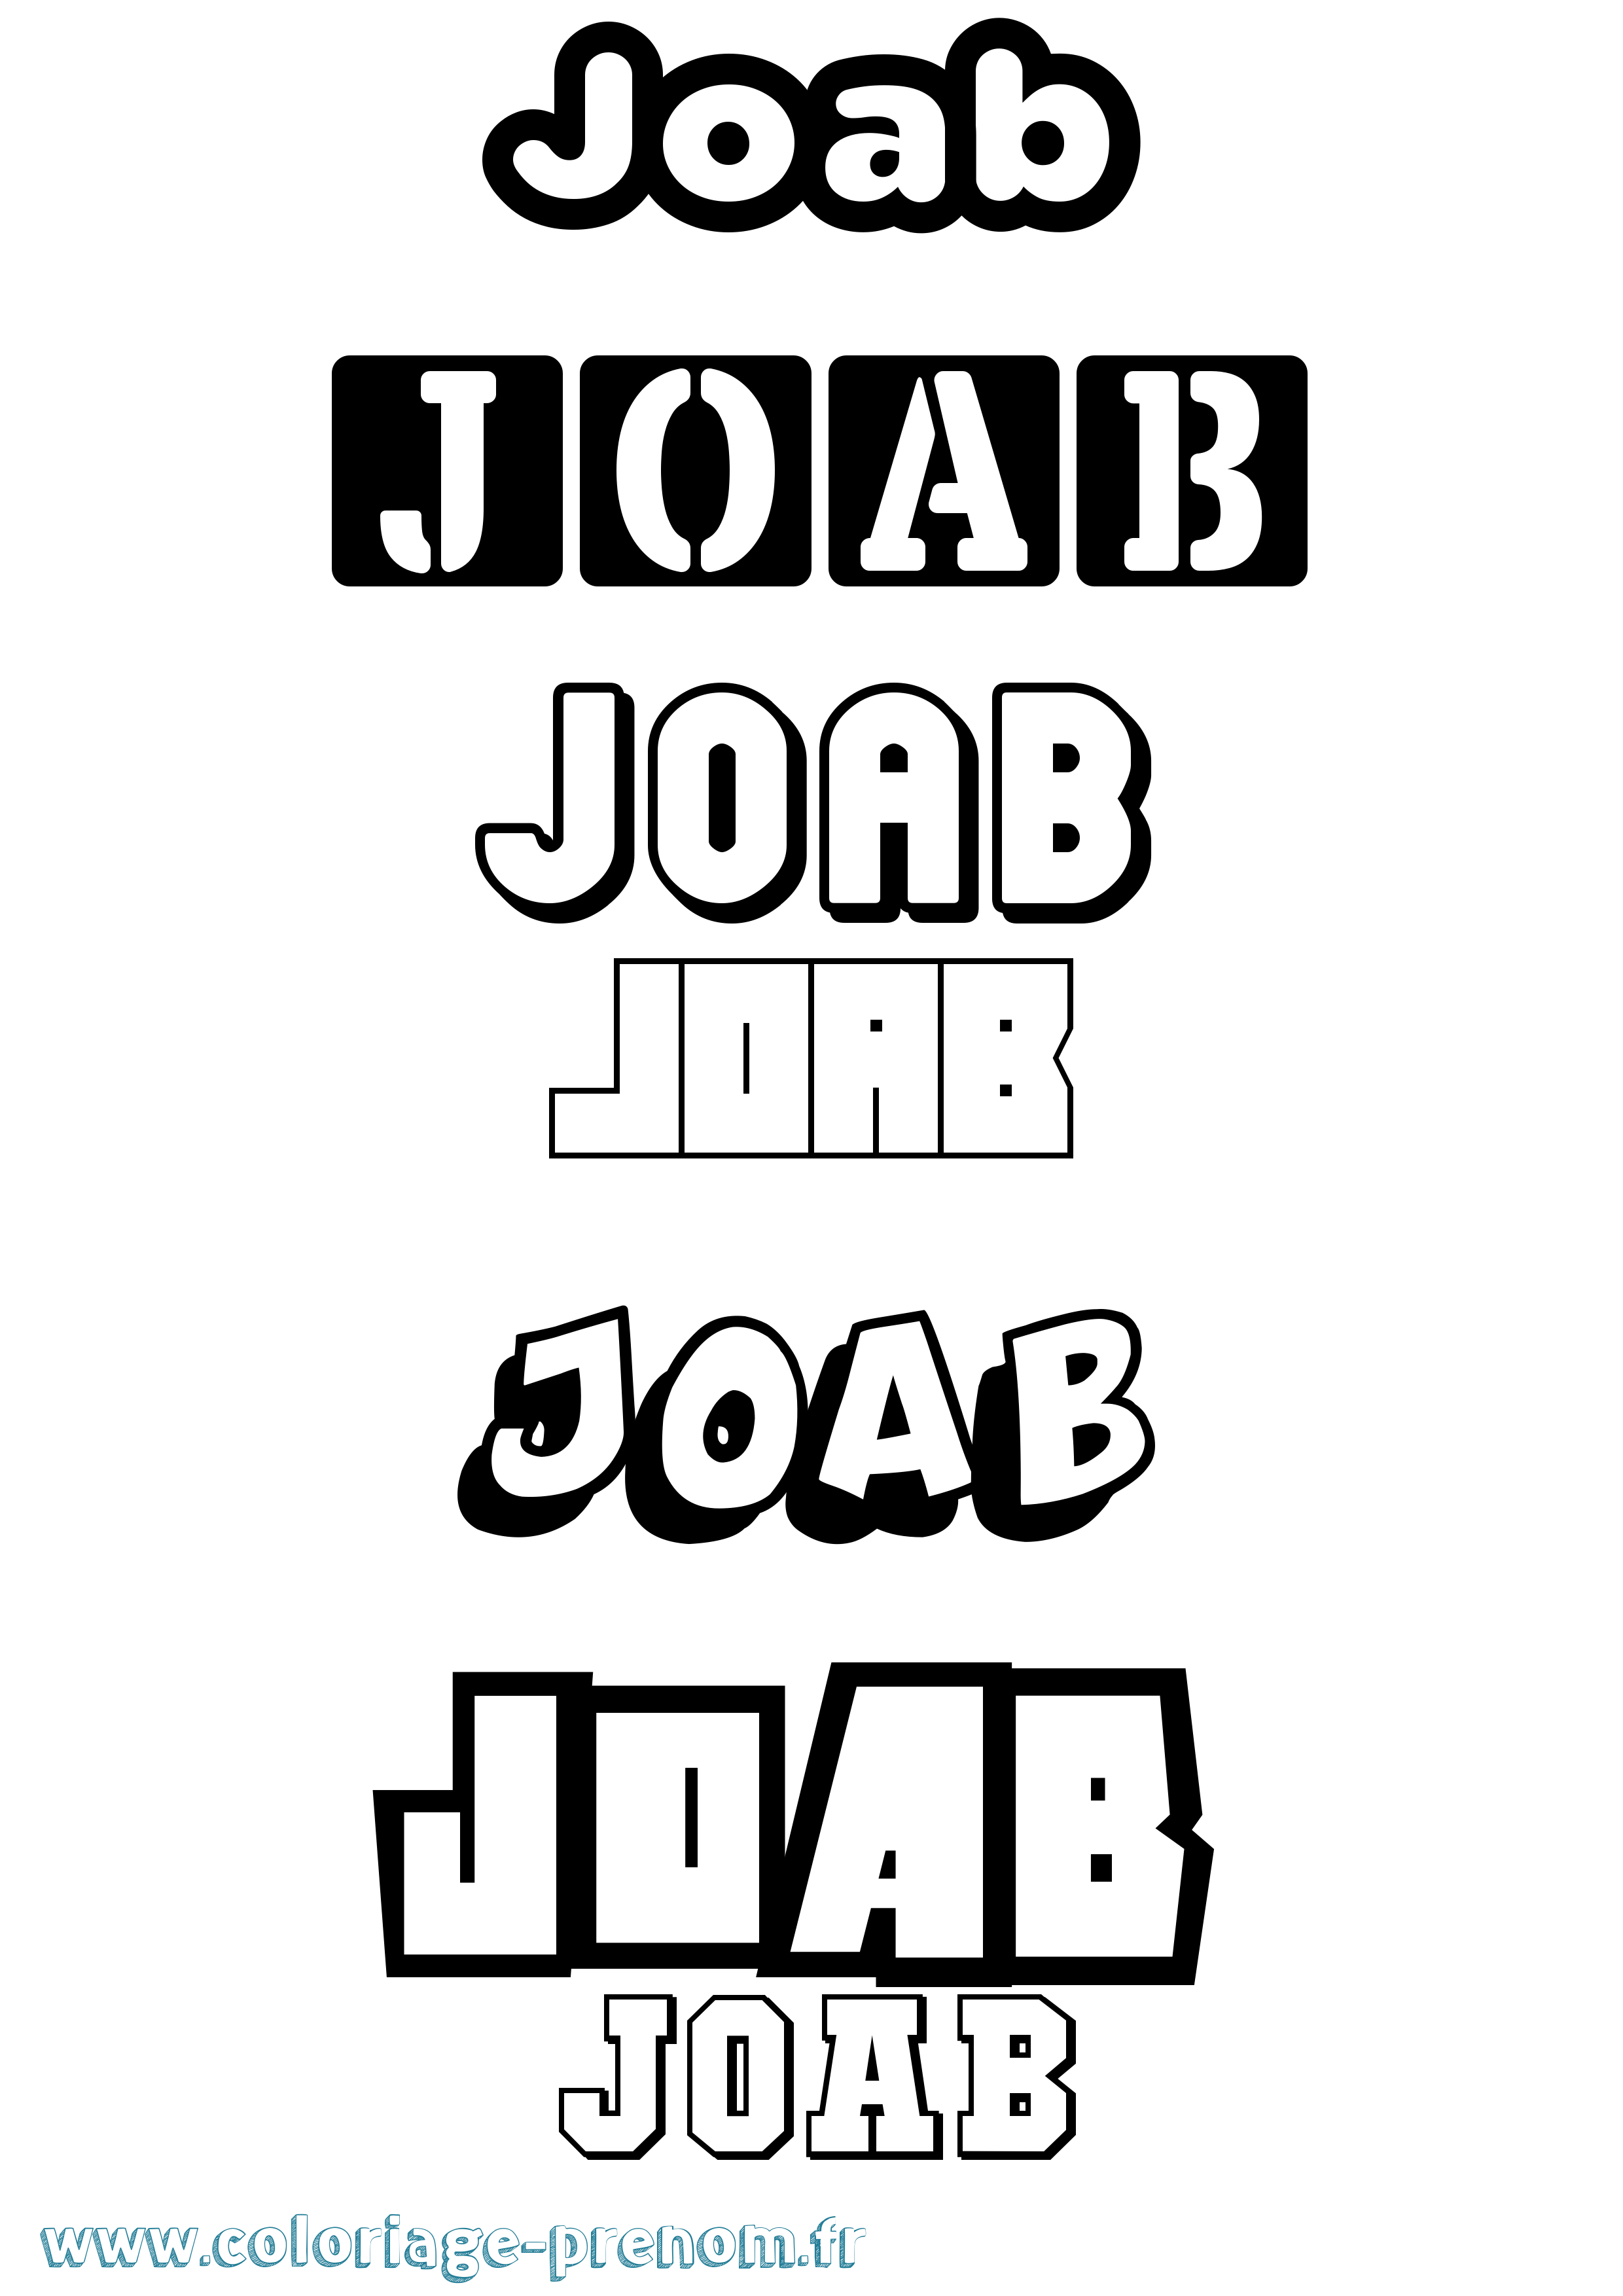 Coloriage prénom Joab Simple